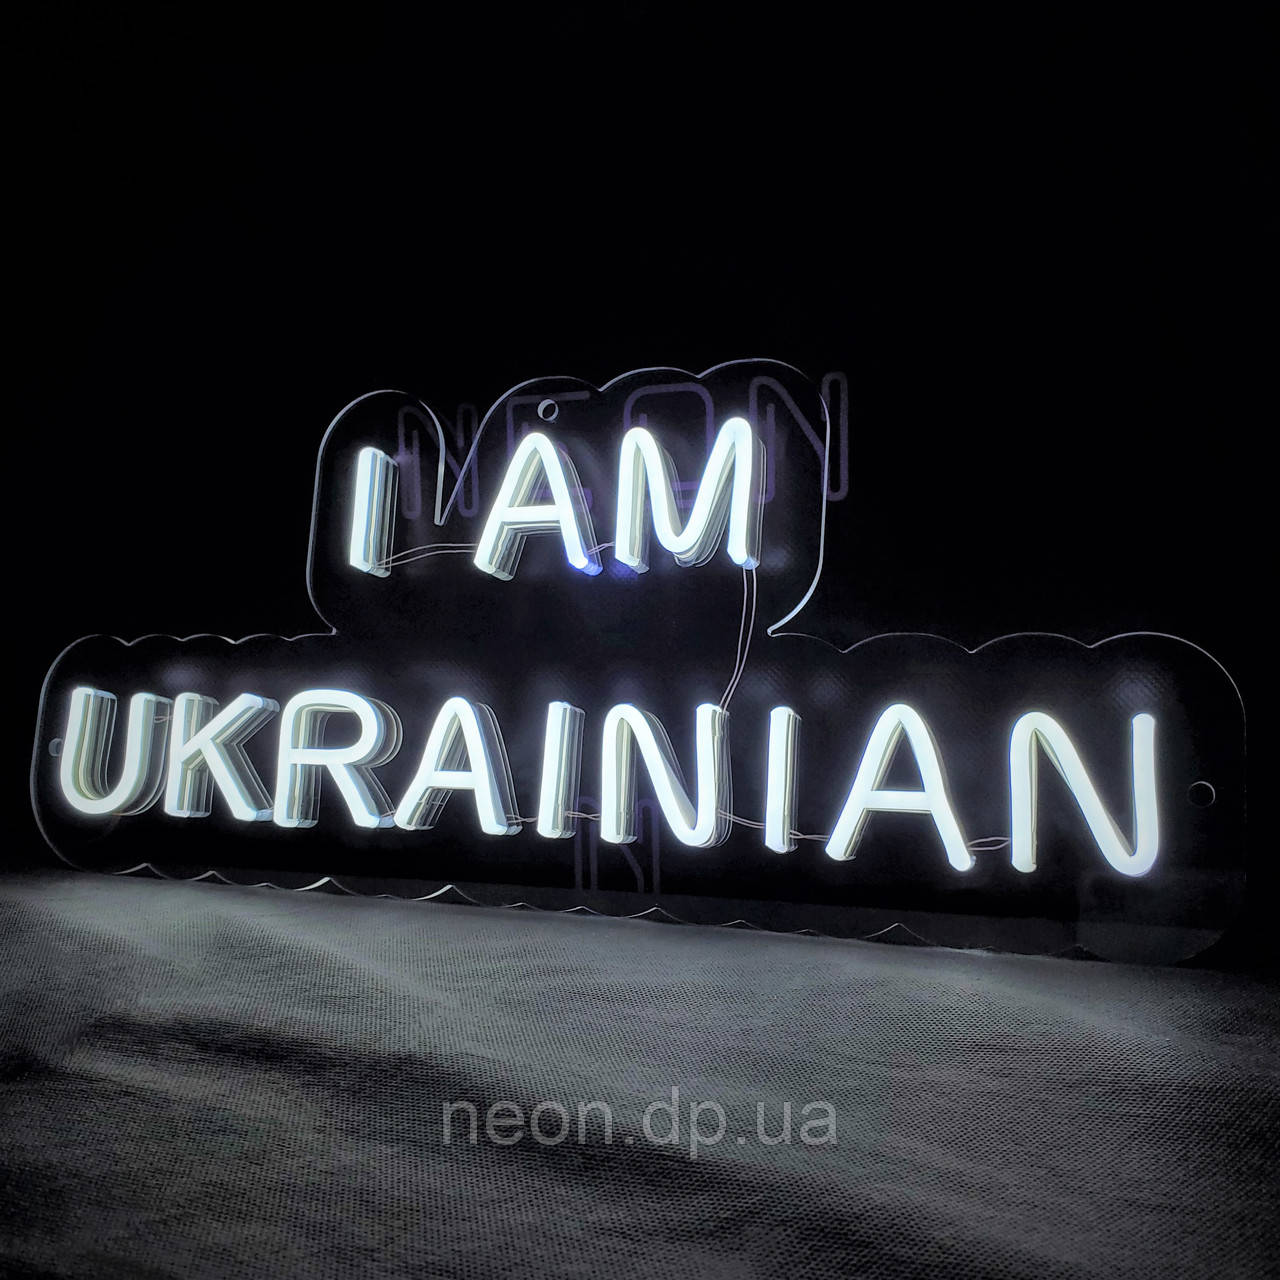 Неонова вивіска "I am Ukrainian"